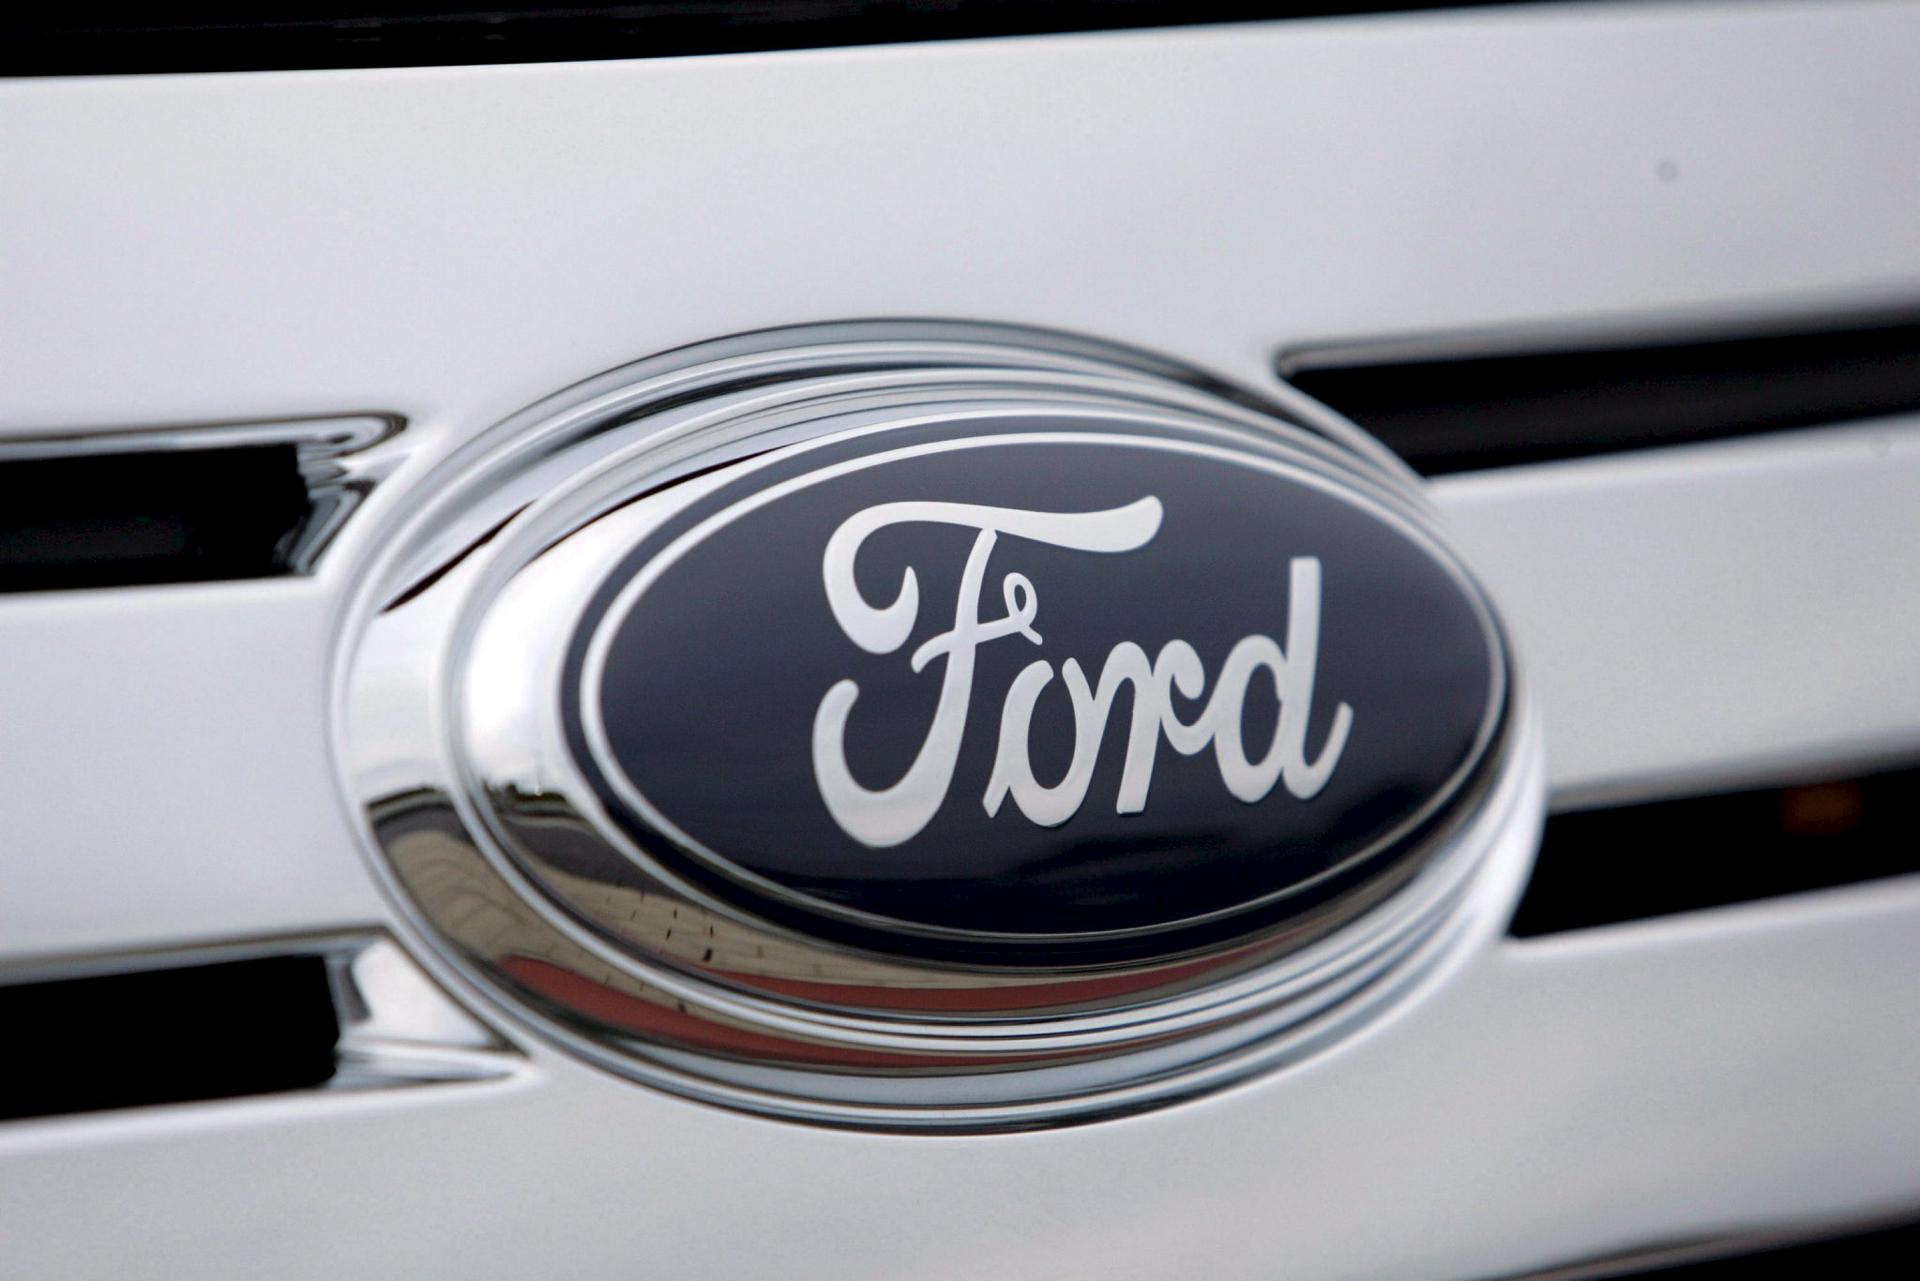 Foto de archivo del logo de Ford. EFE/Jeff Kowalsky
